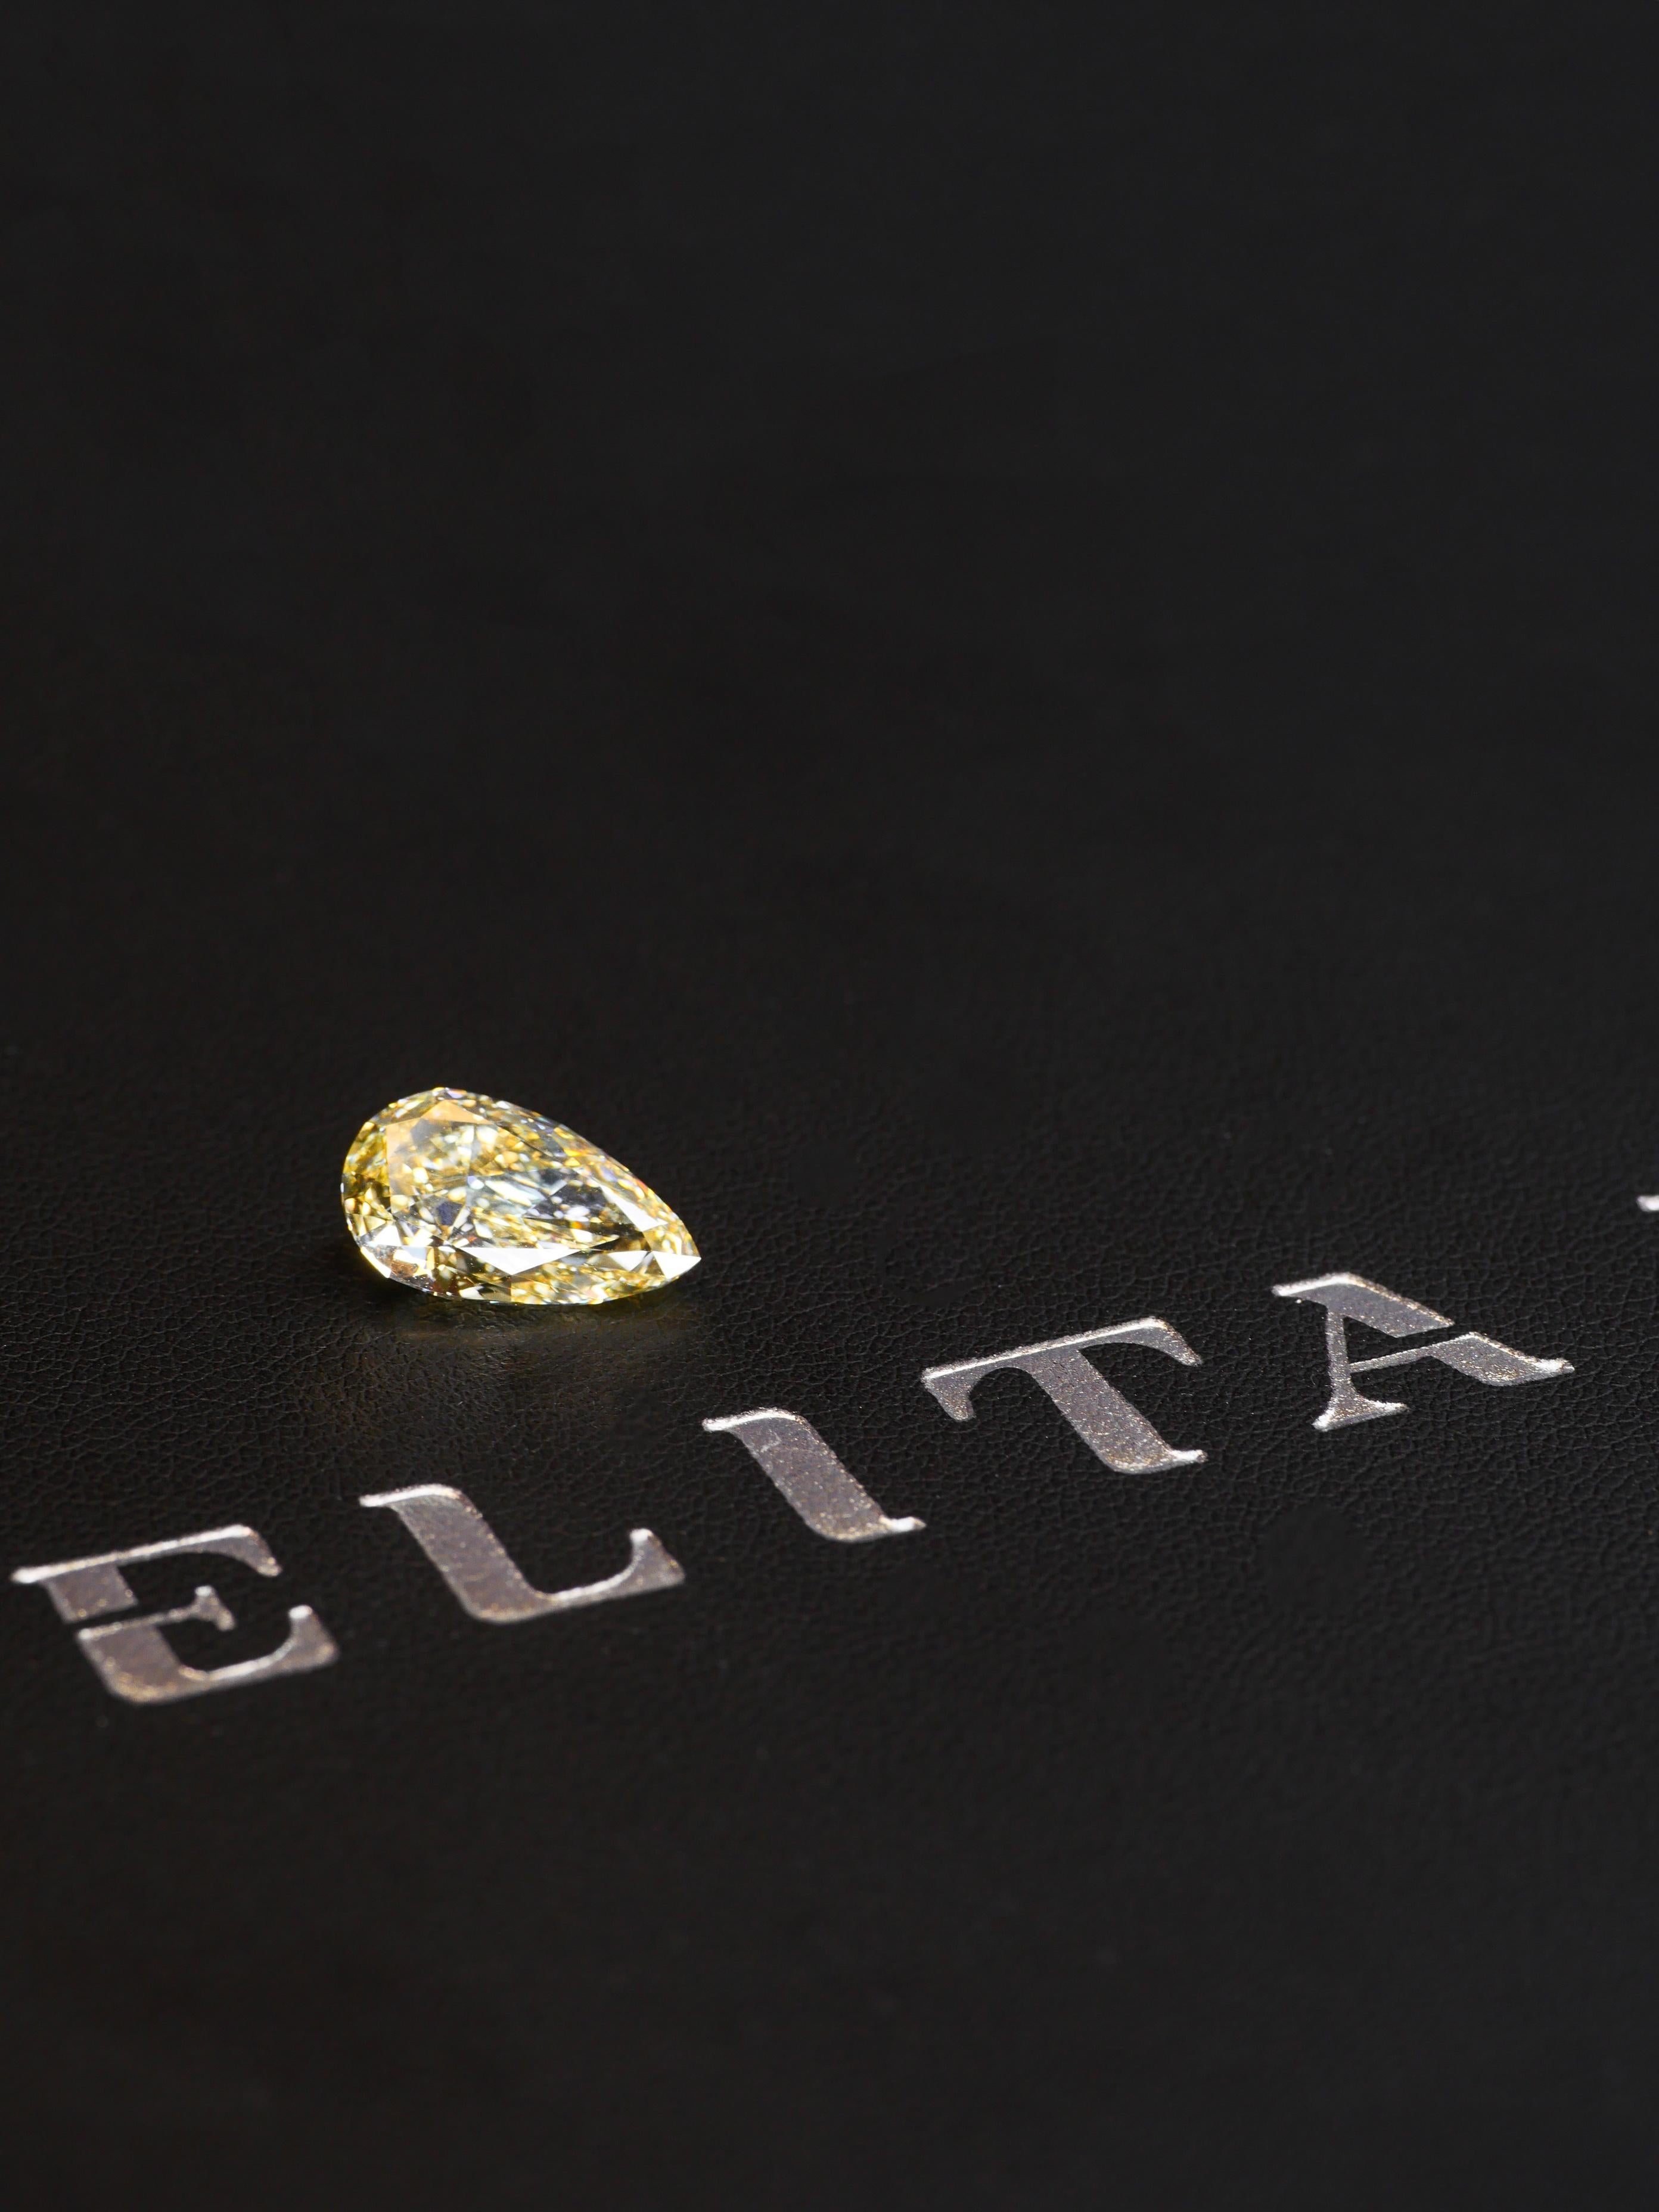 GIA Certified 5.06 Carat Fancy Yellow Pear Cut Diamond For Sale 1